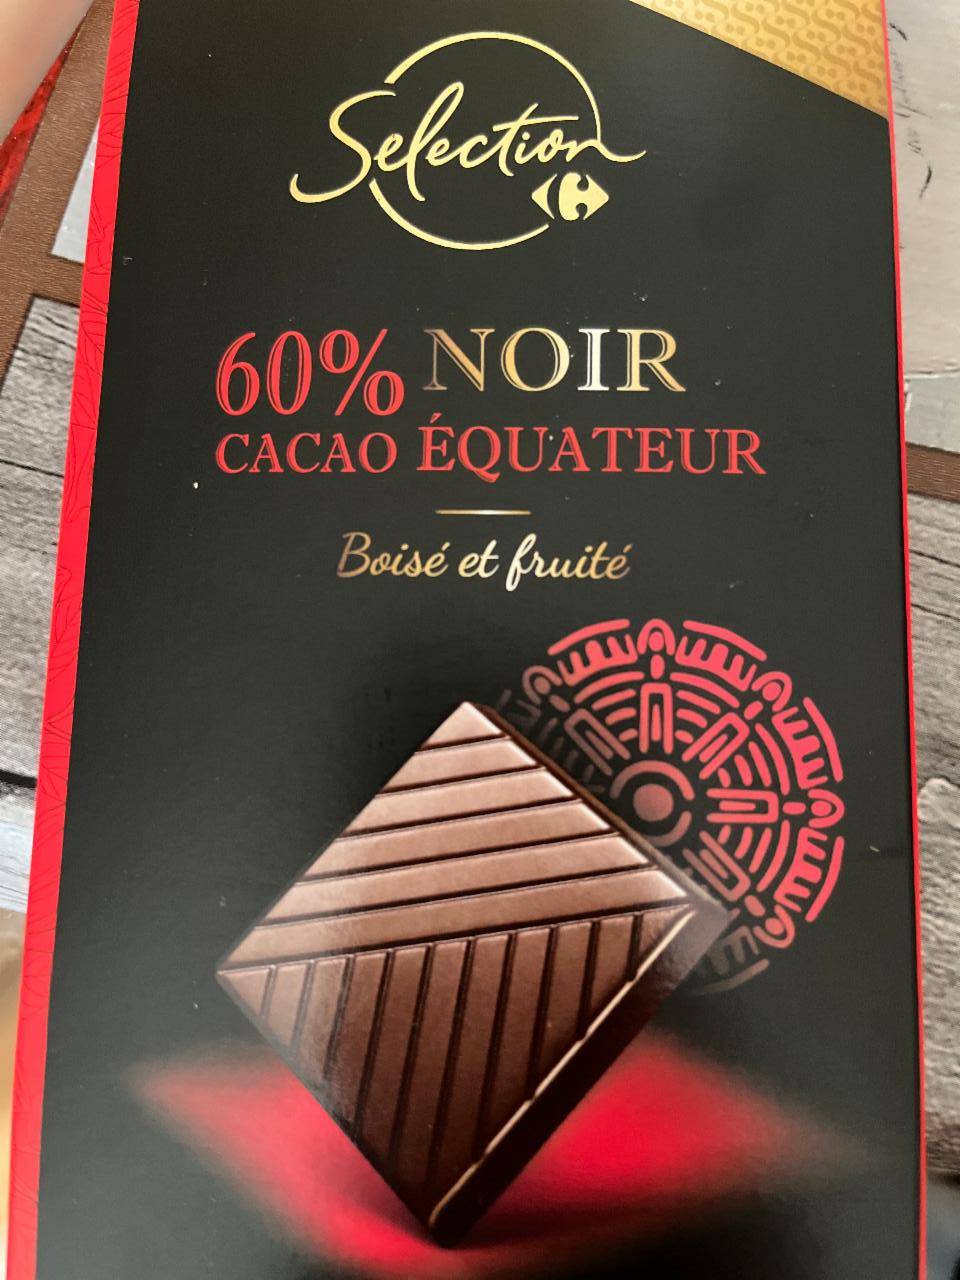 Фото - Шоколад темный 60% Carrefour selection